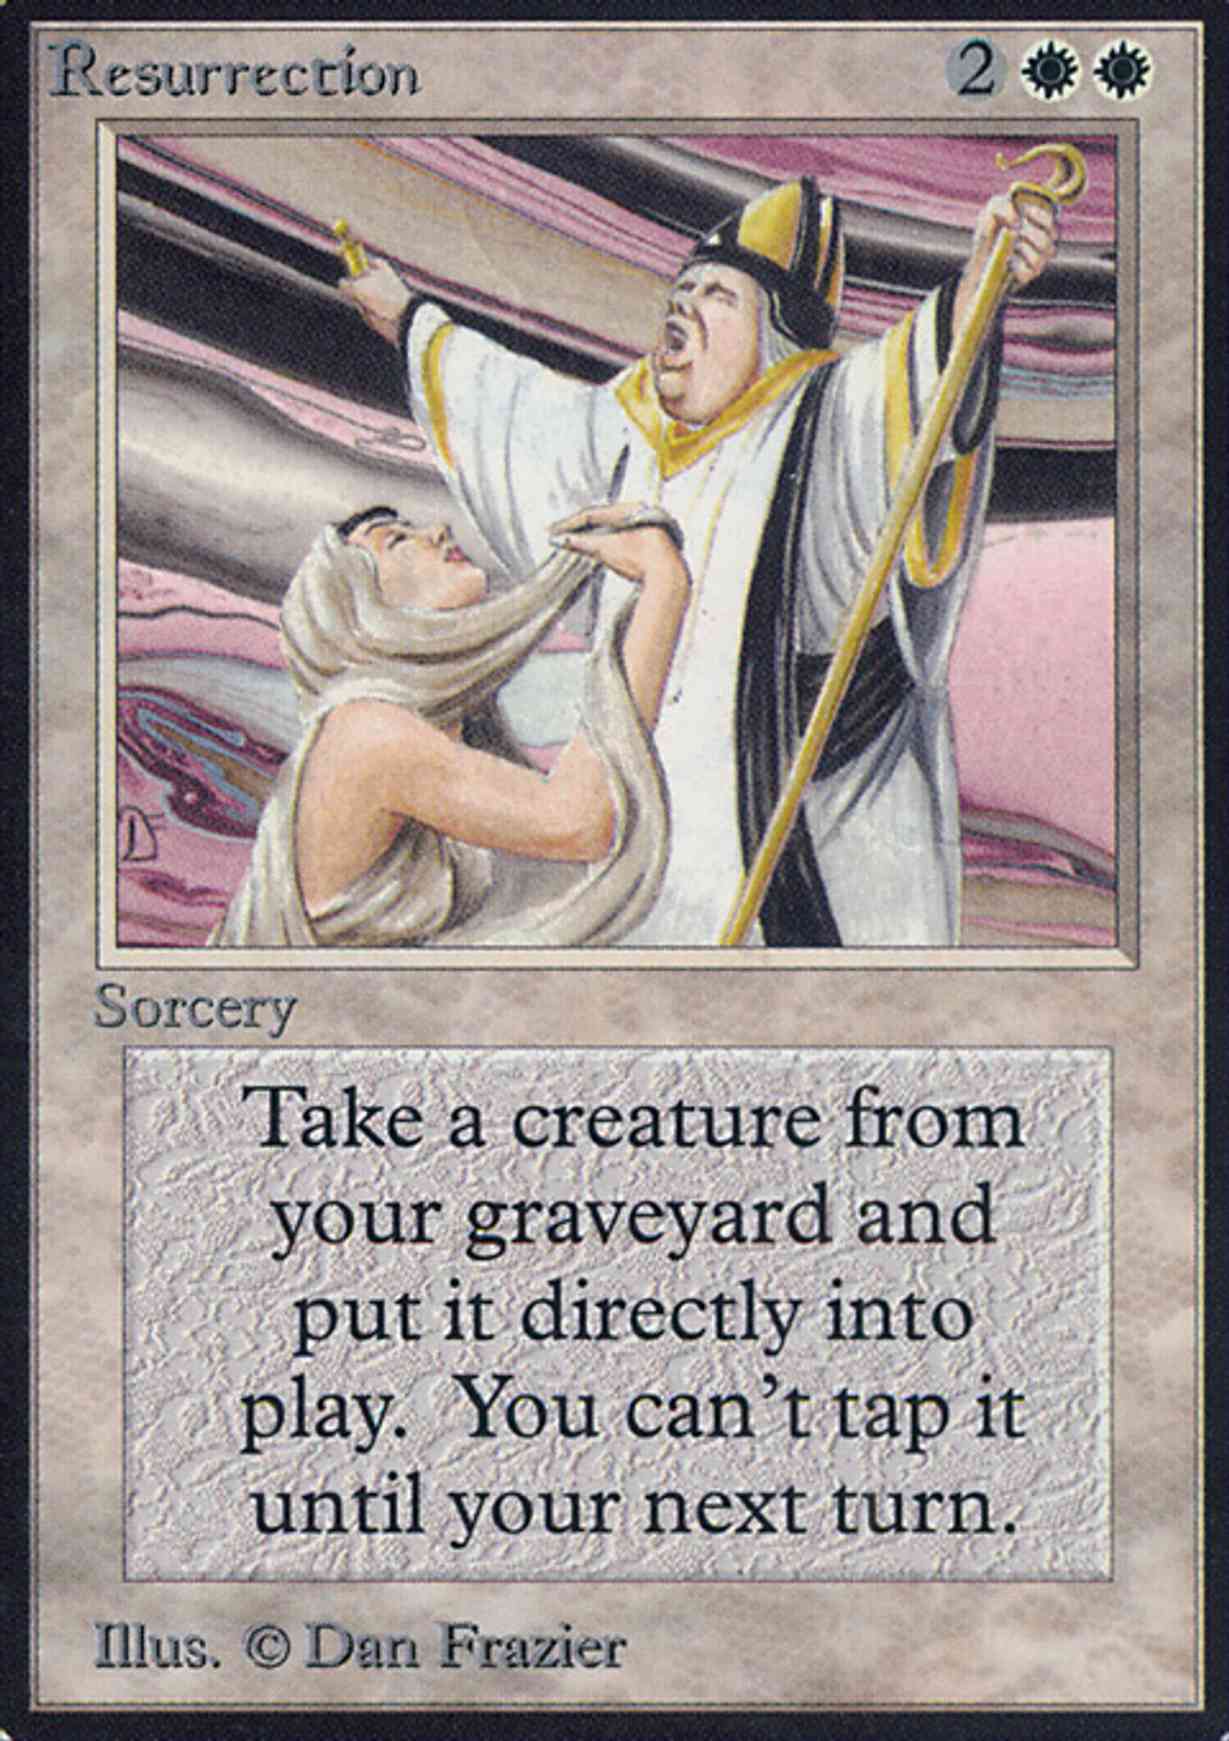 Resurrection magic card front